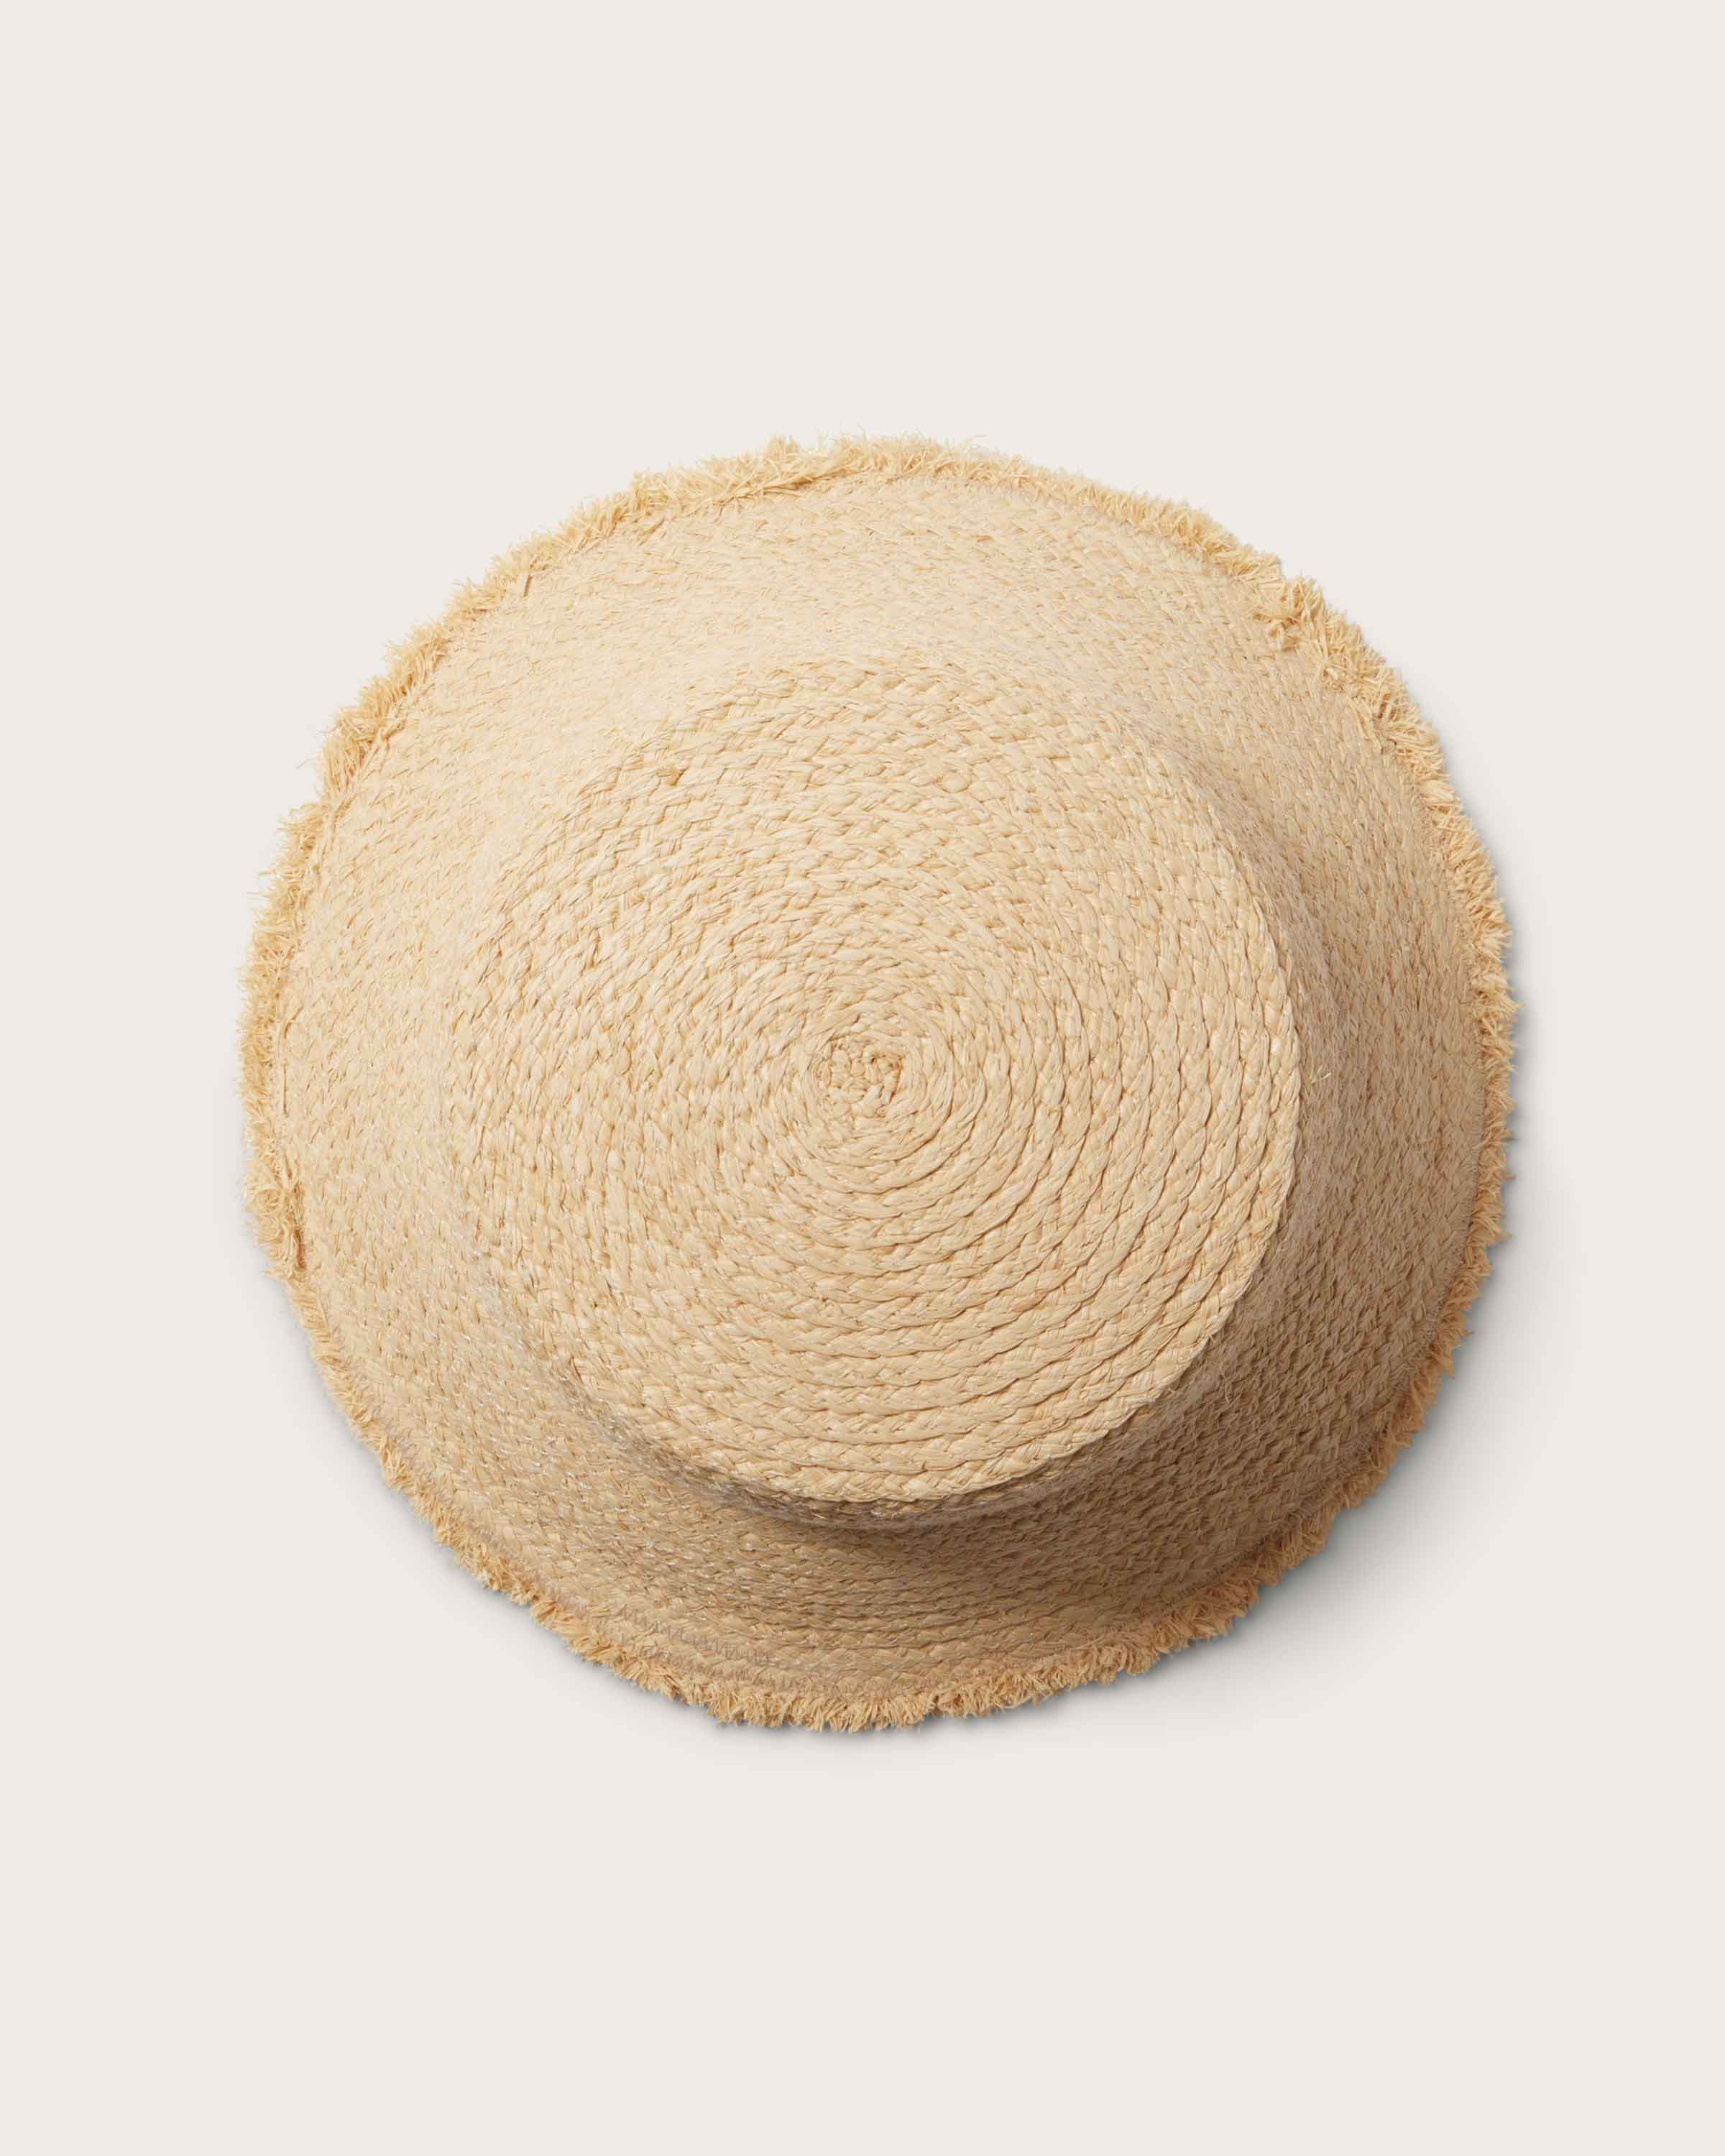 Hemlock Lenny Straw Bucket Hat in Natural top of hat